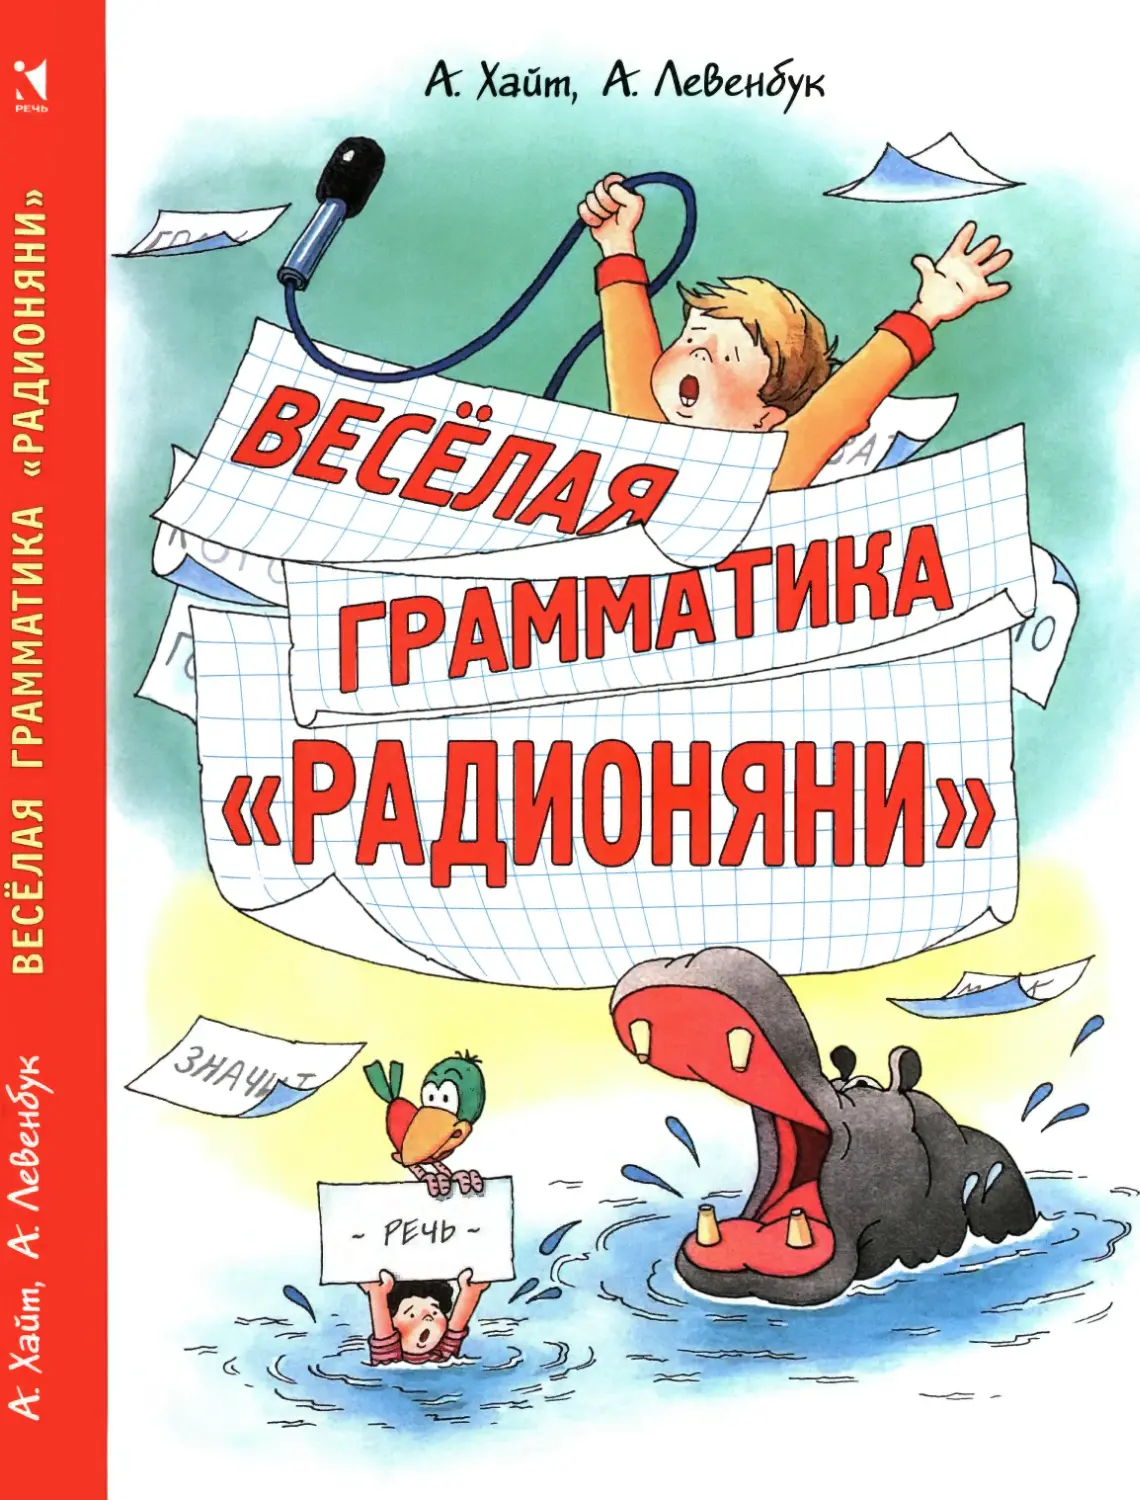 Левенбук А.С., Хайт А.И. Весёлая граматика «Радионяни». 2019